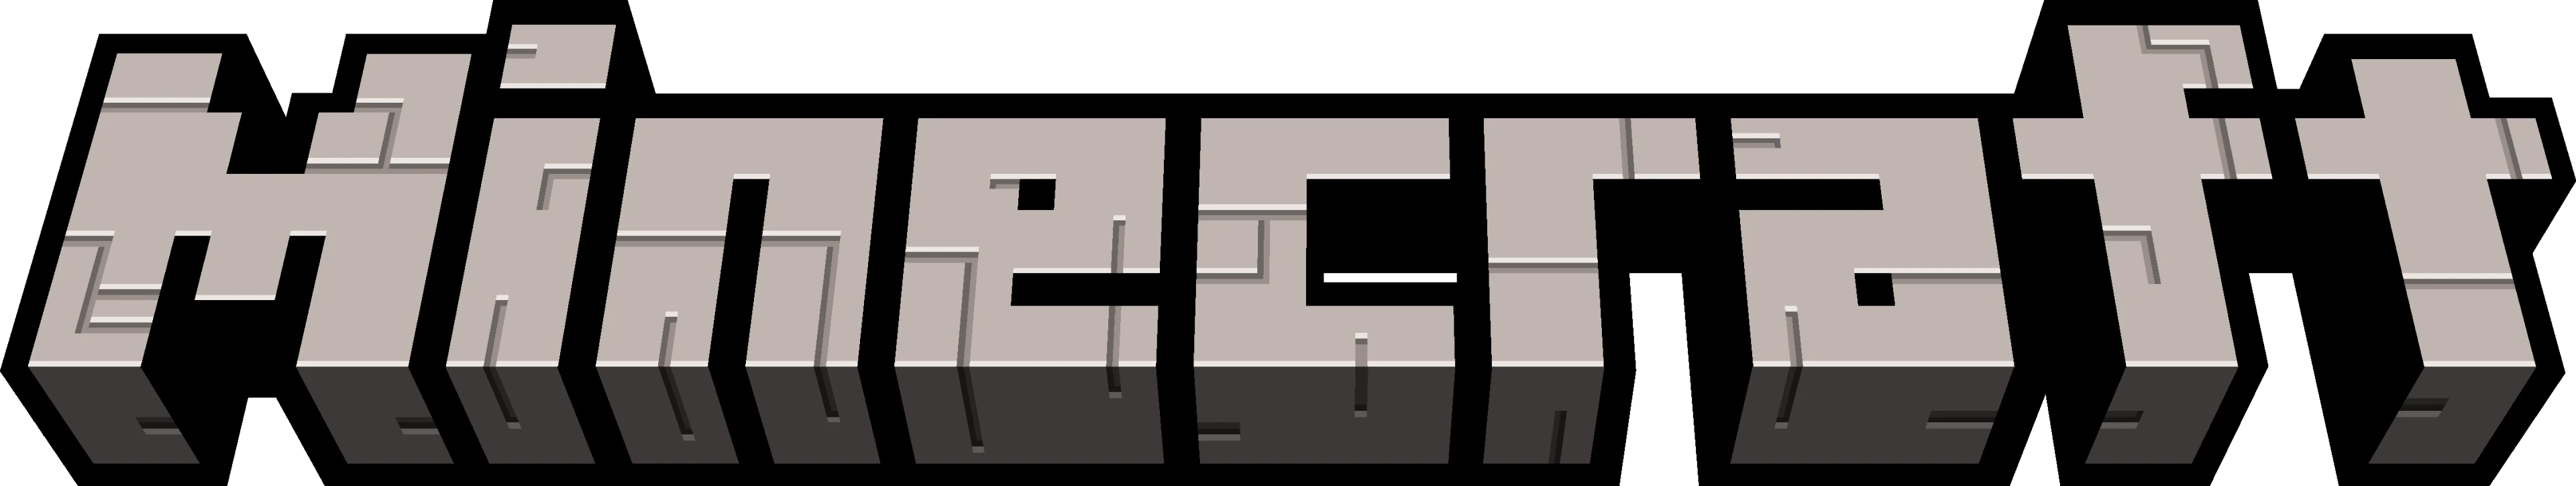 minecraft logo lowercase